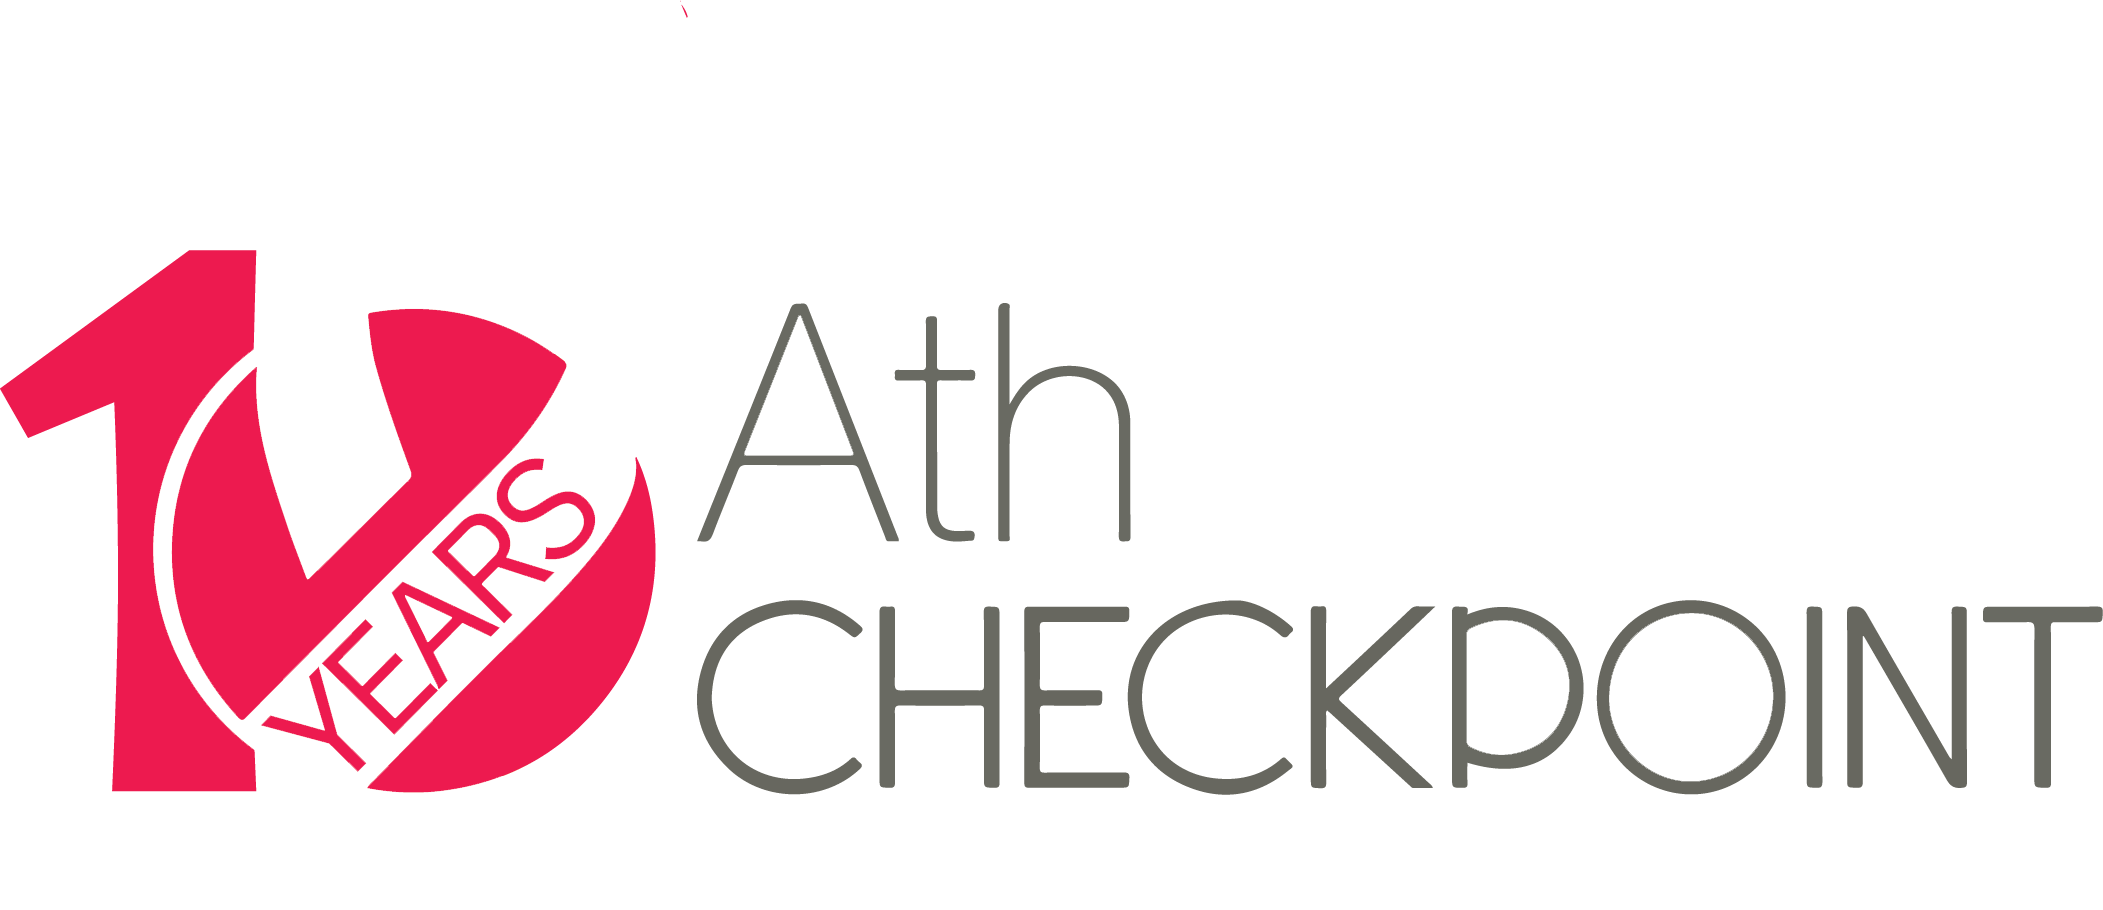 Featured image for “<strong>10 χρόνια Ath Checkpoint, 10 χρόνια πρόληψη, 10 χρόνια προαγωγή της σεξουαλικής υγείας</strong>”